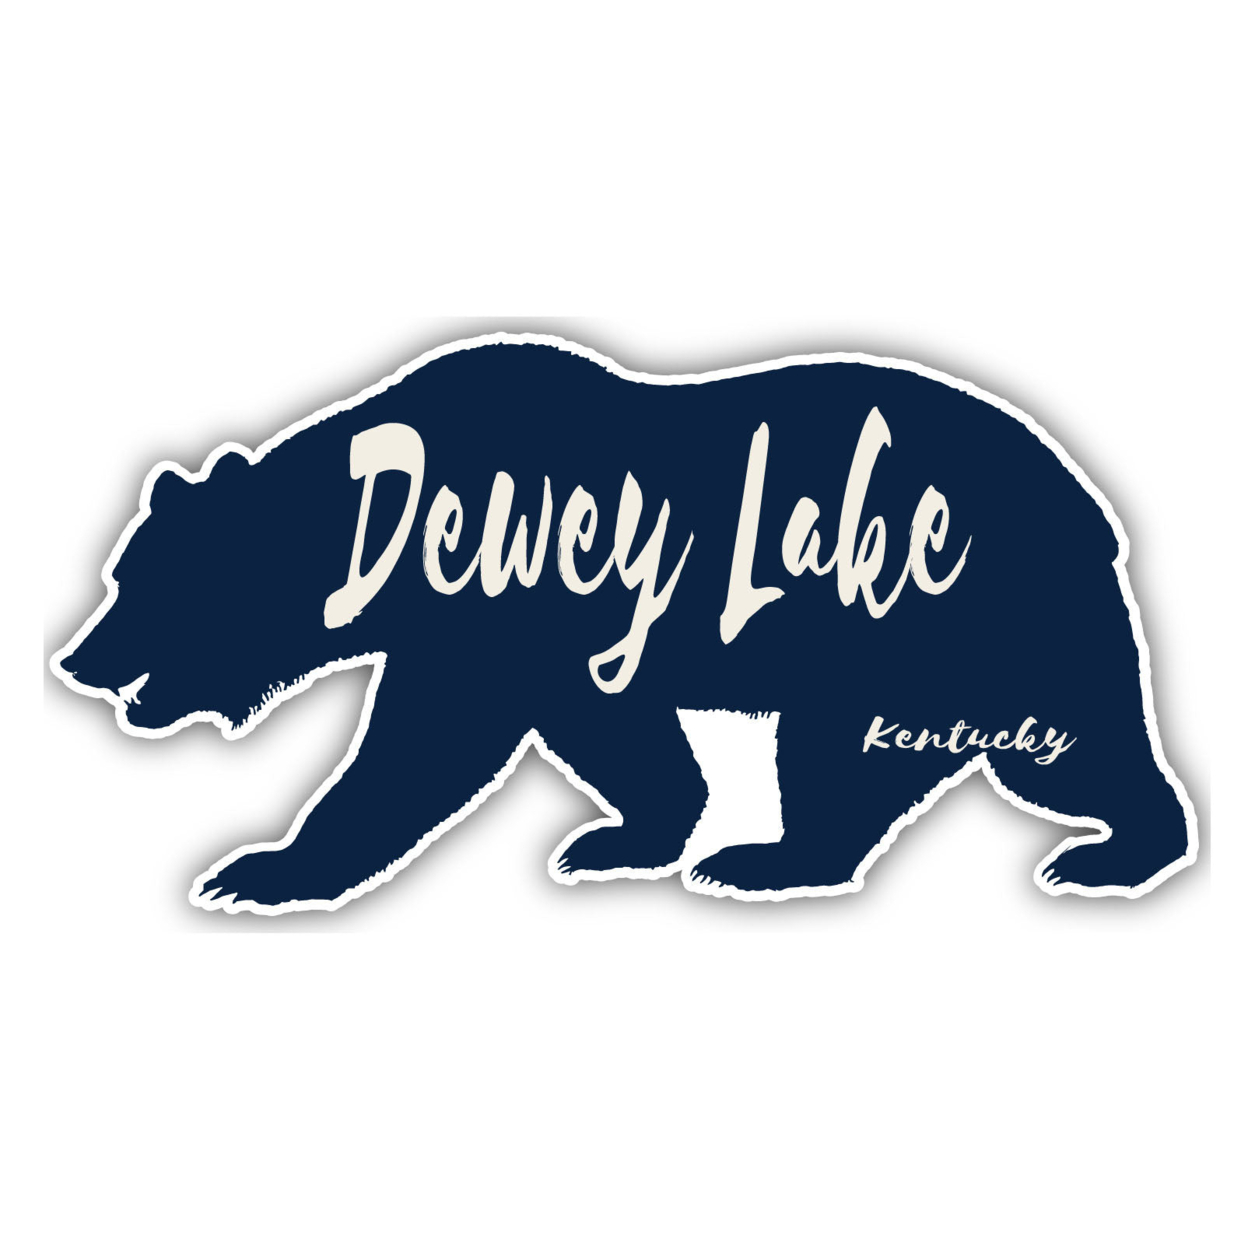 Dewey Lake Kentucky Souvenir Decorative Stickers (Choose Theme And Size) - 4-Pack, 6-Inch, Bear